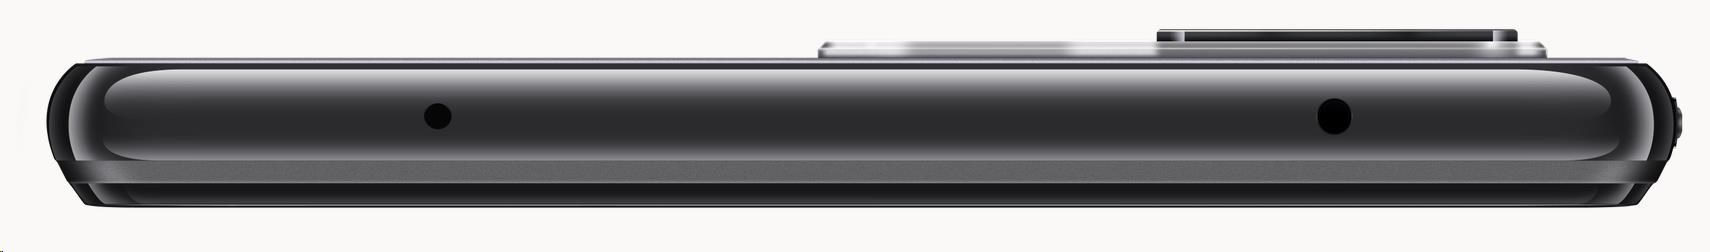 BAZAR - Xiaomi Mi 11 Lite 5G 6GB/ 128GB Truffle Black - po opravě (komplet)8 